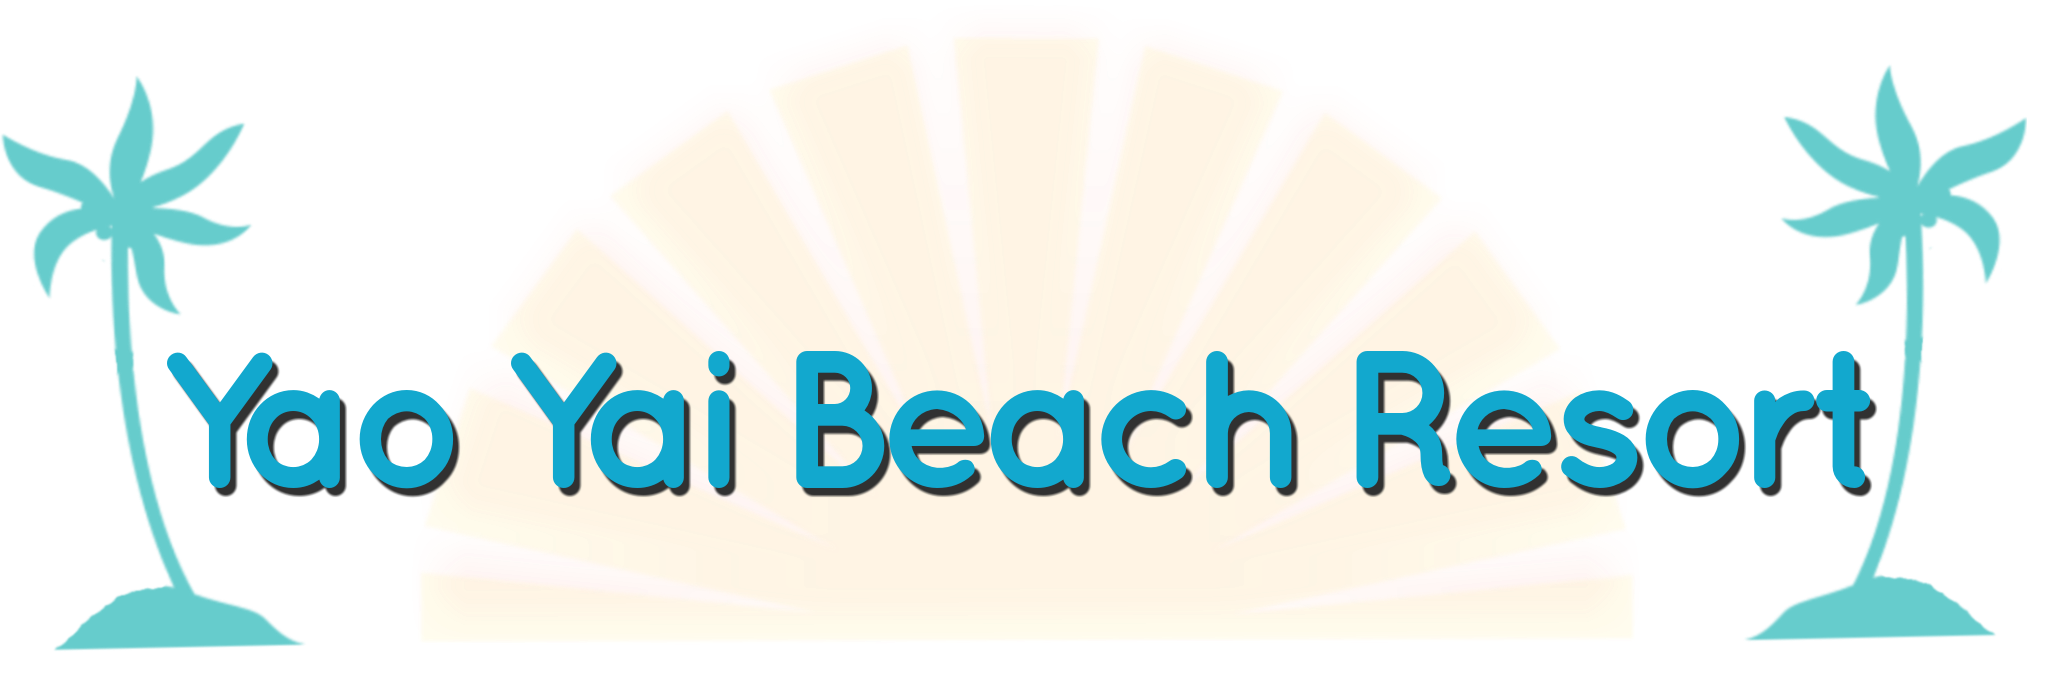 Yao Yai Beach Resort